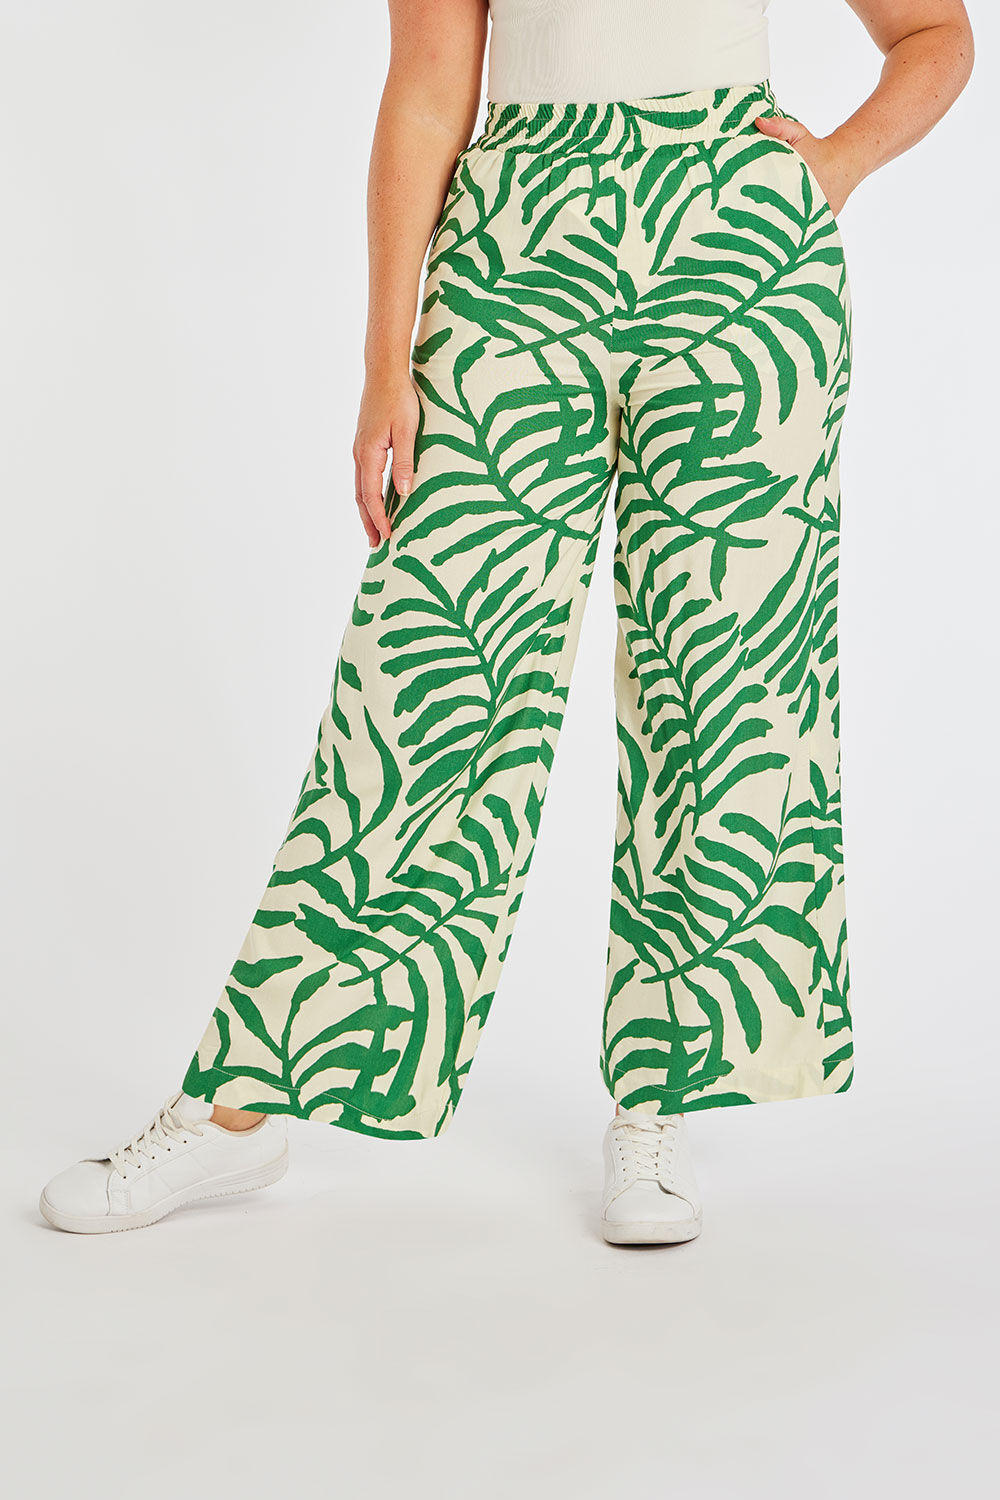 Comfyluxe Ladies Palm Tree Print Wide Leg Palazzo Pants with Side Slits |  eBay